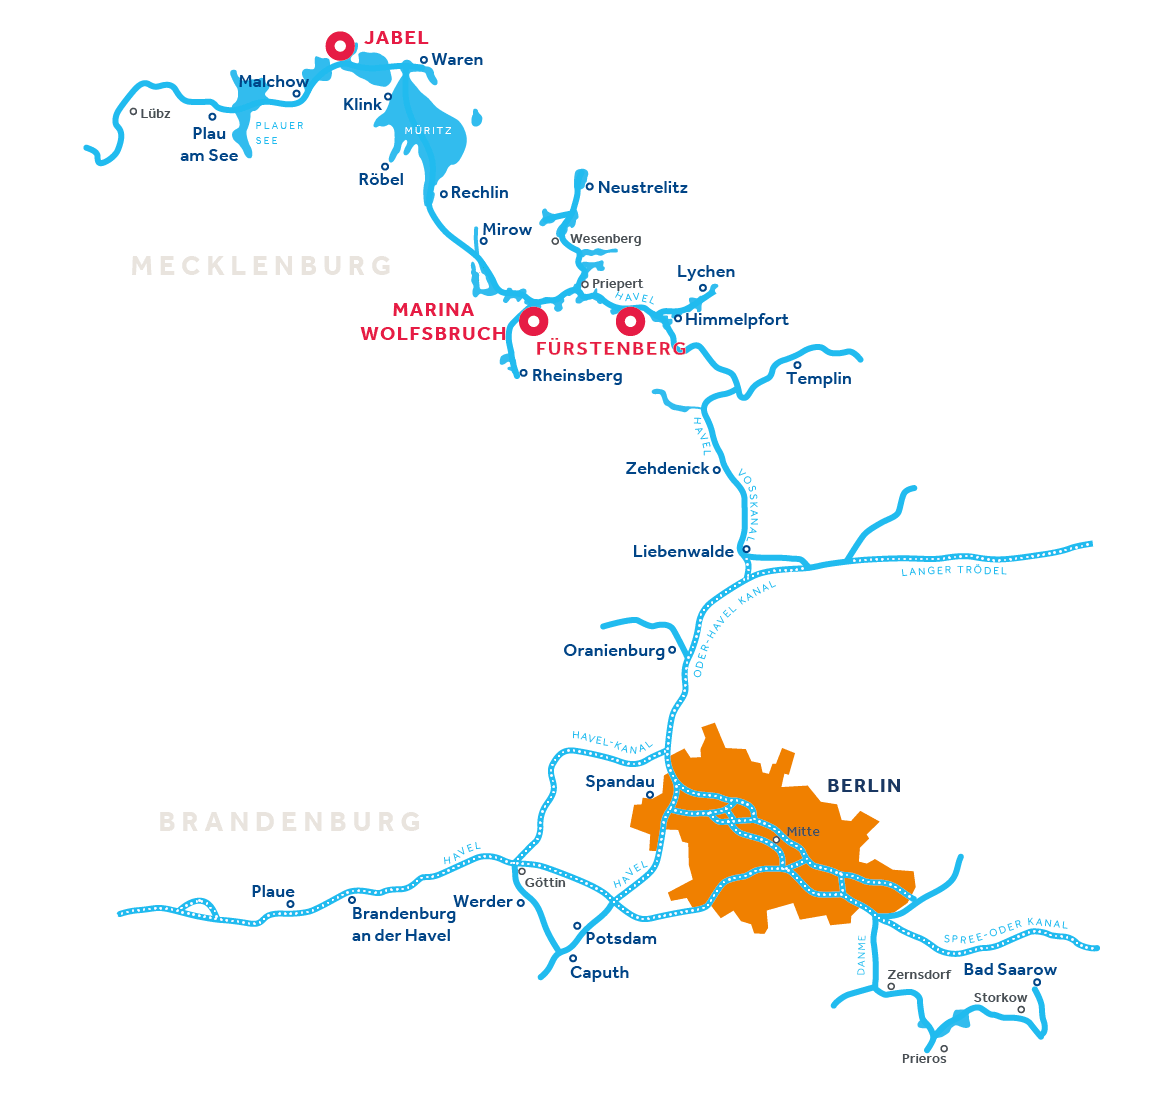 Map of Mecklenburg and Brandenburg region in Germany